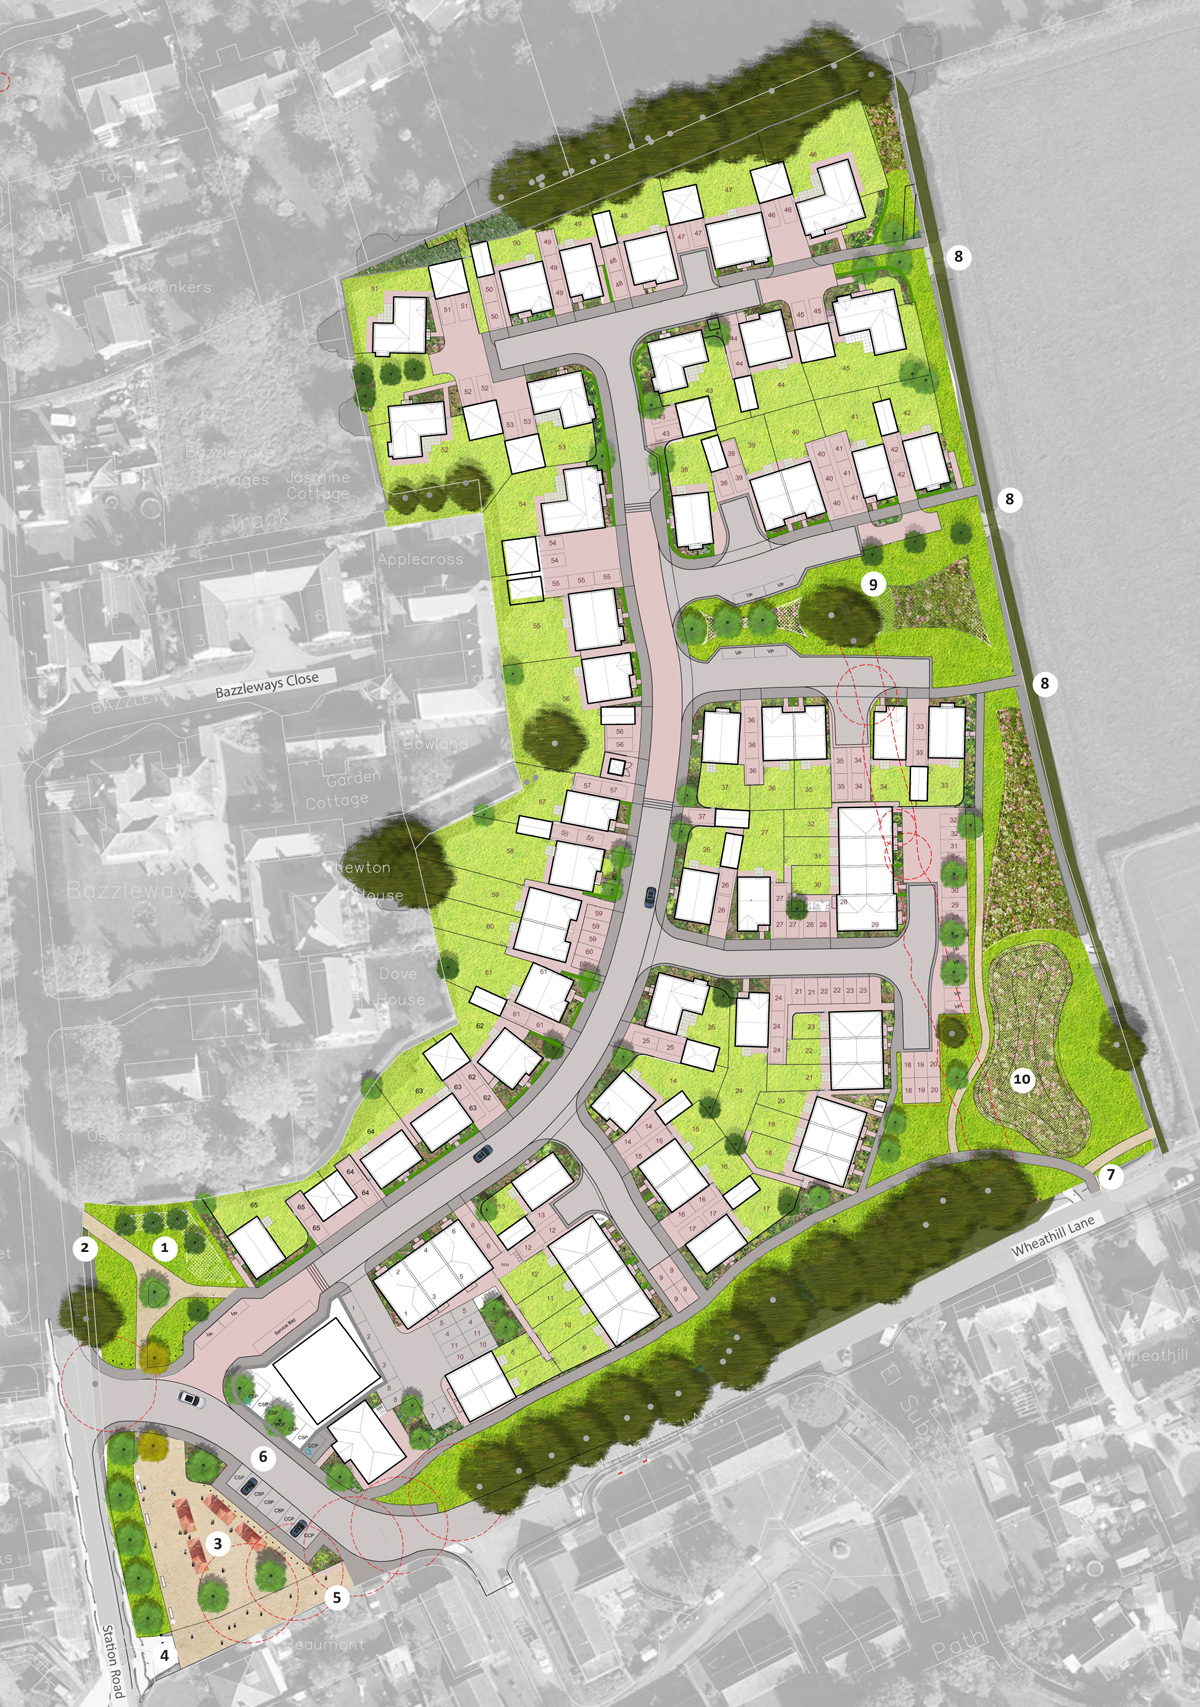 Plan of residential development